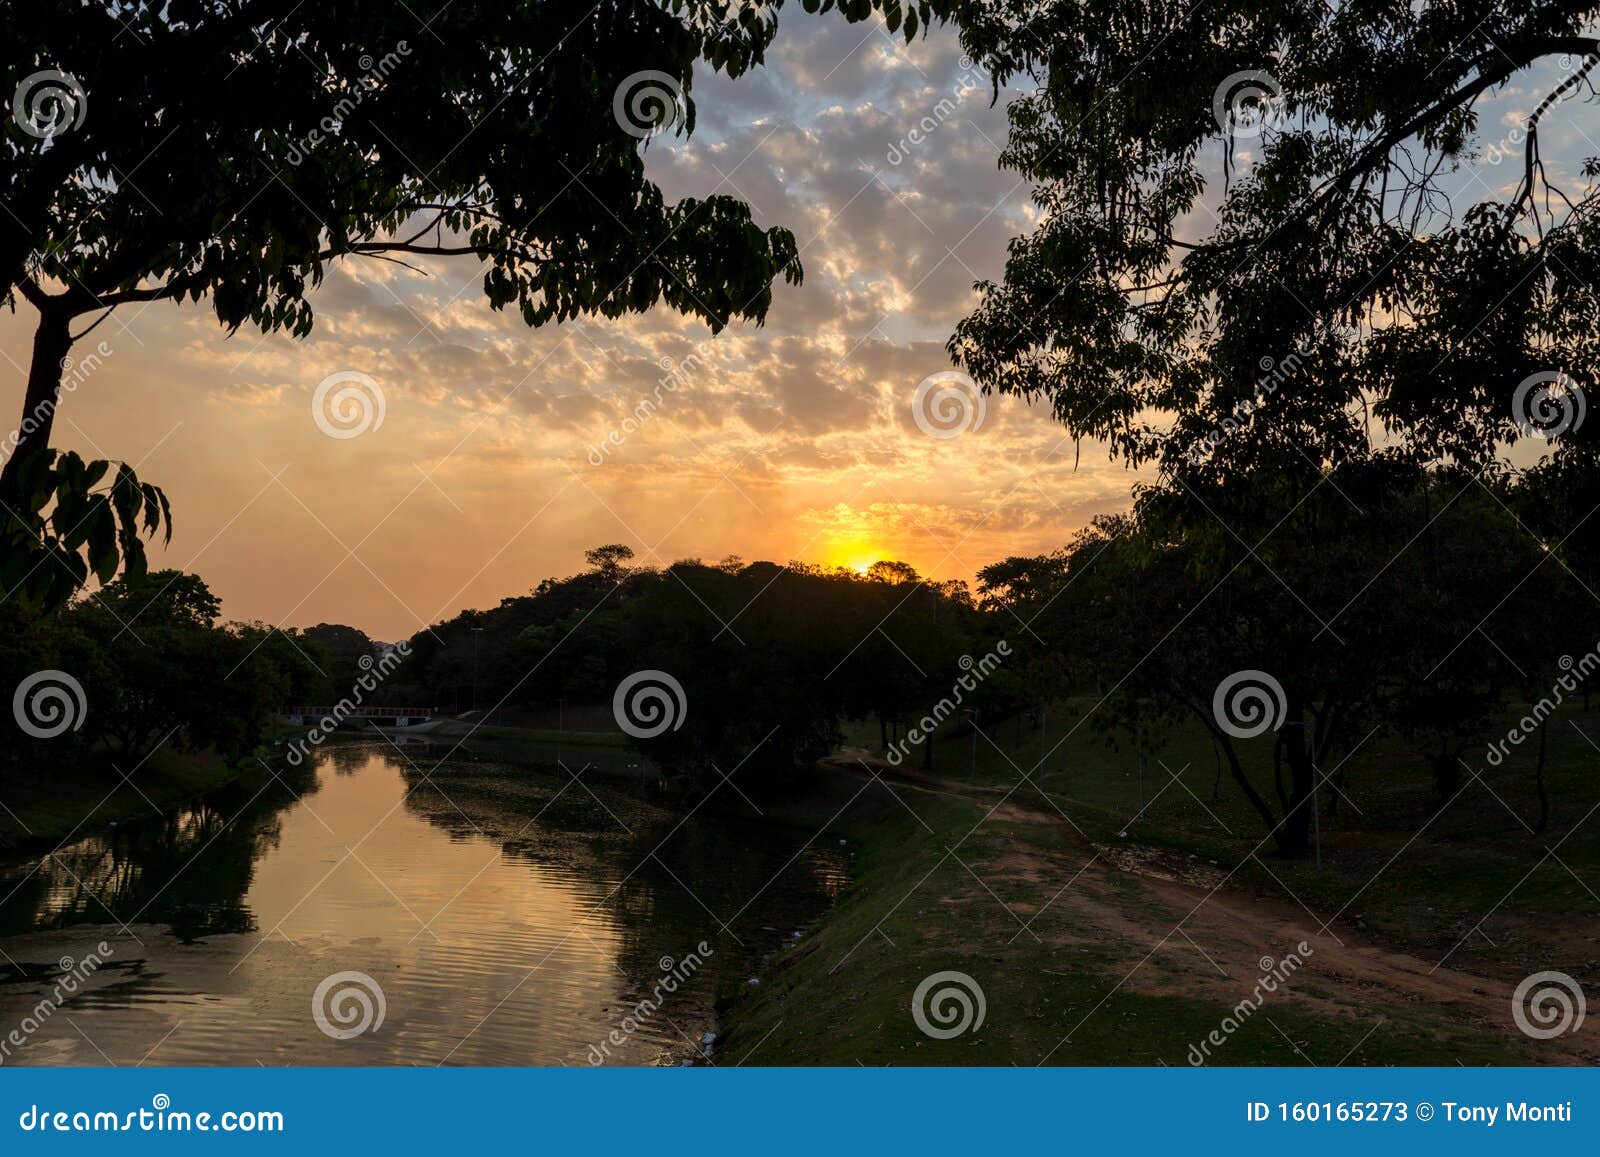 sunset near the river, in the ecological park, in indaiatuba, brazil